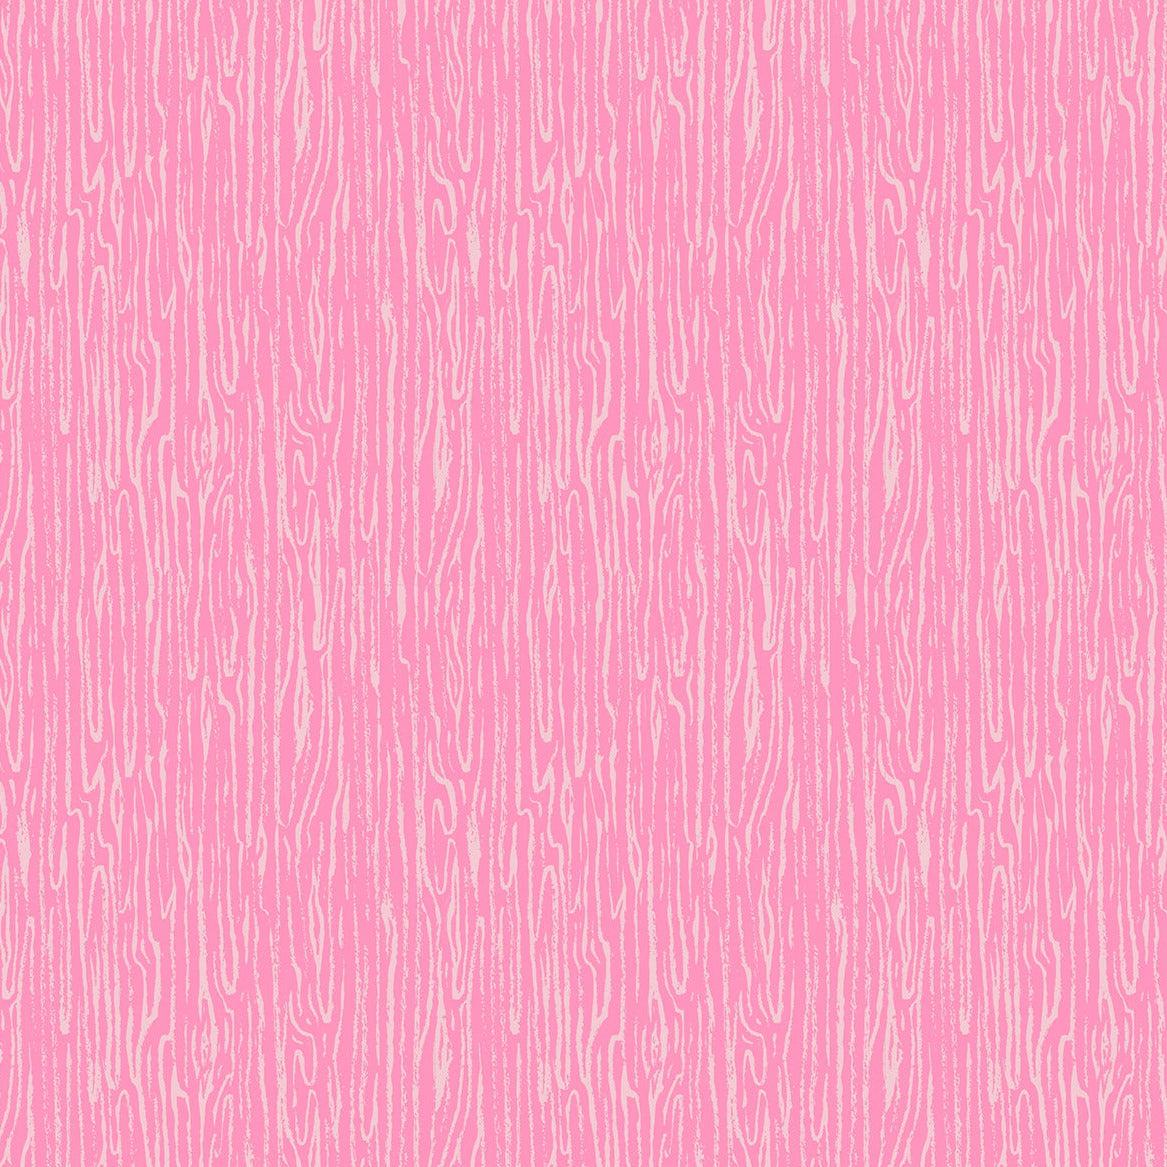 Ruby Star Society-Tree Bark Flamingo-fabric-gather here online